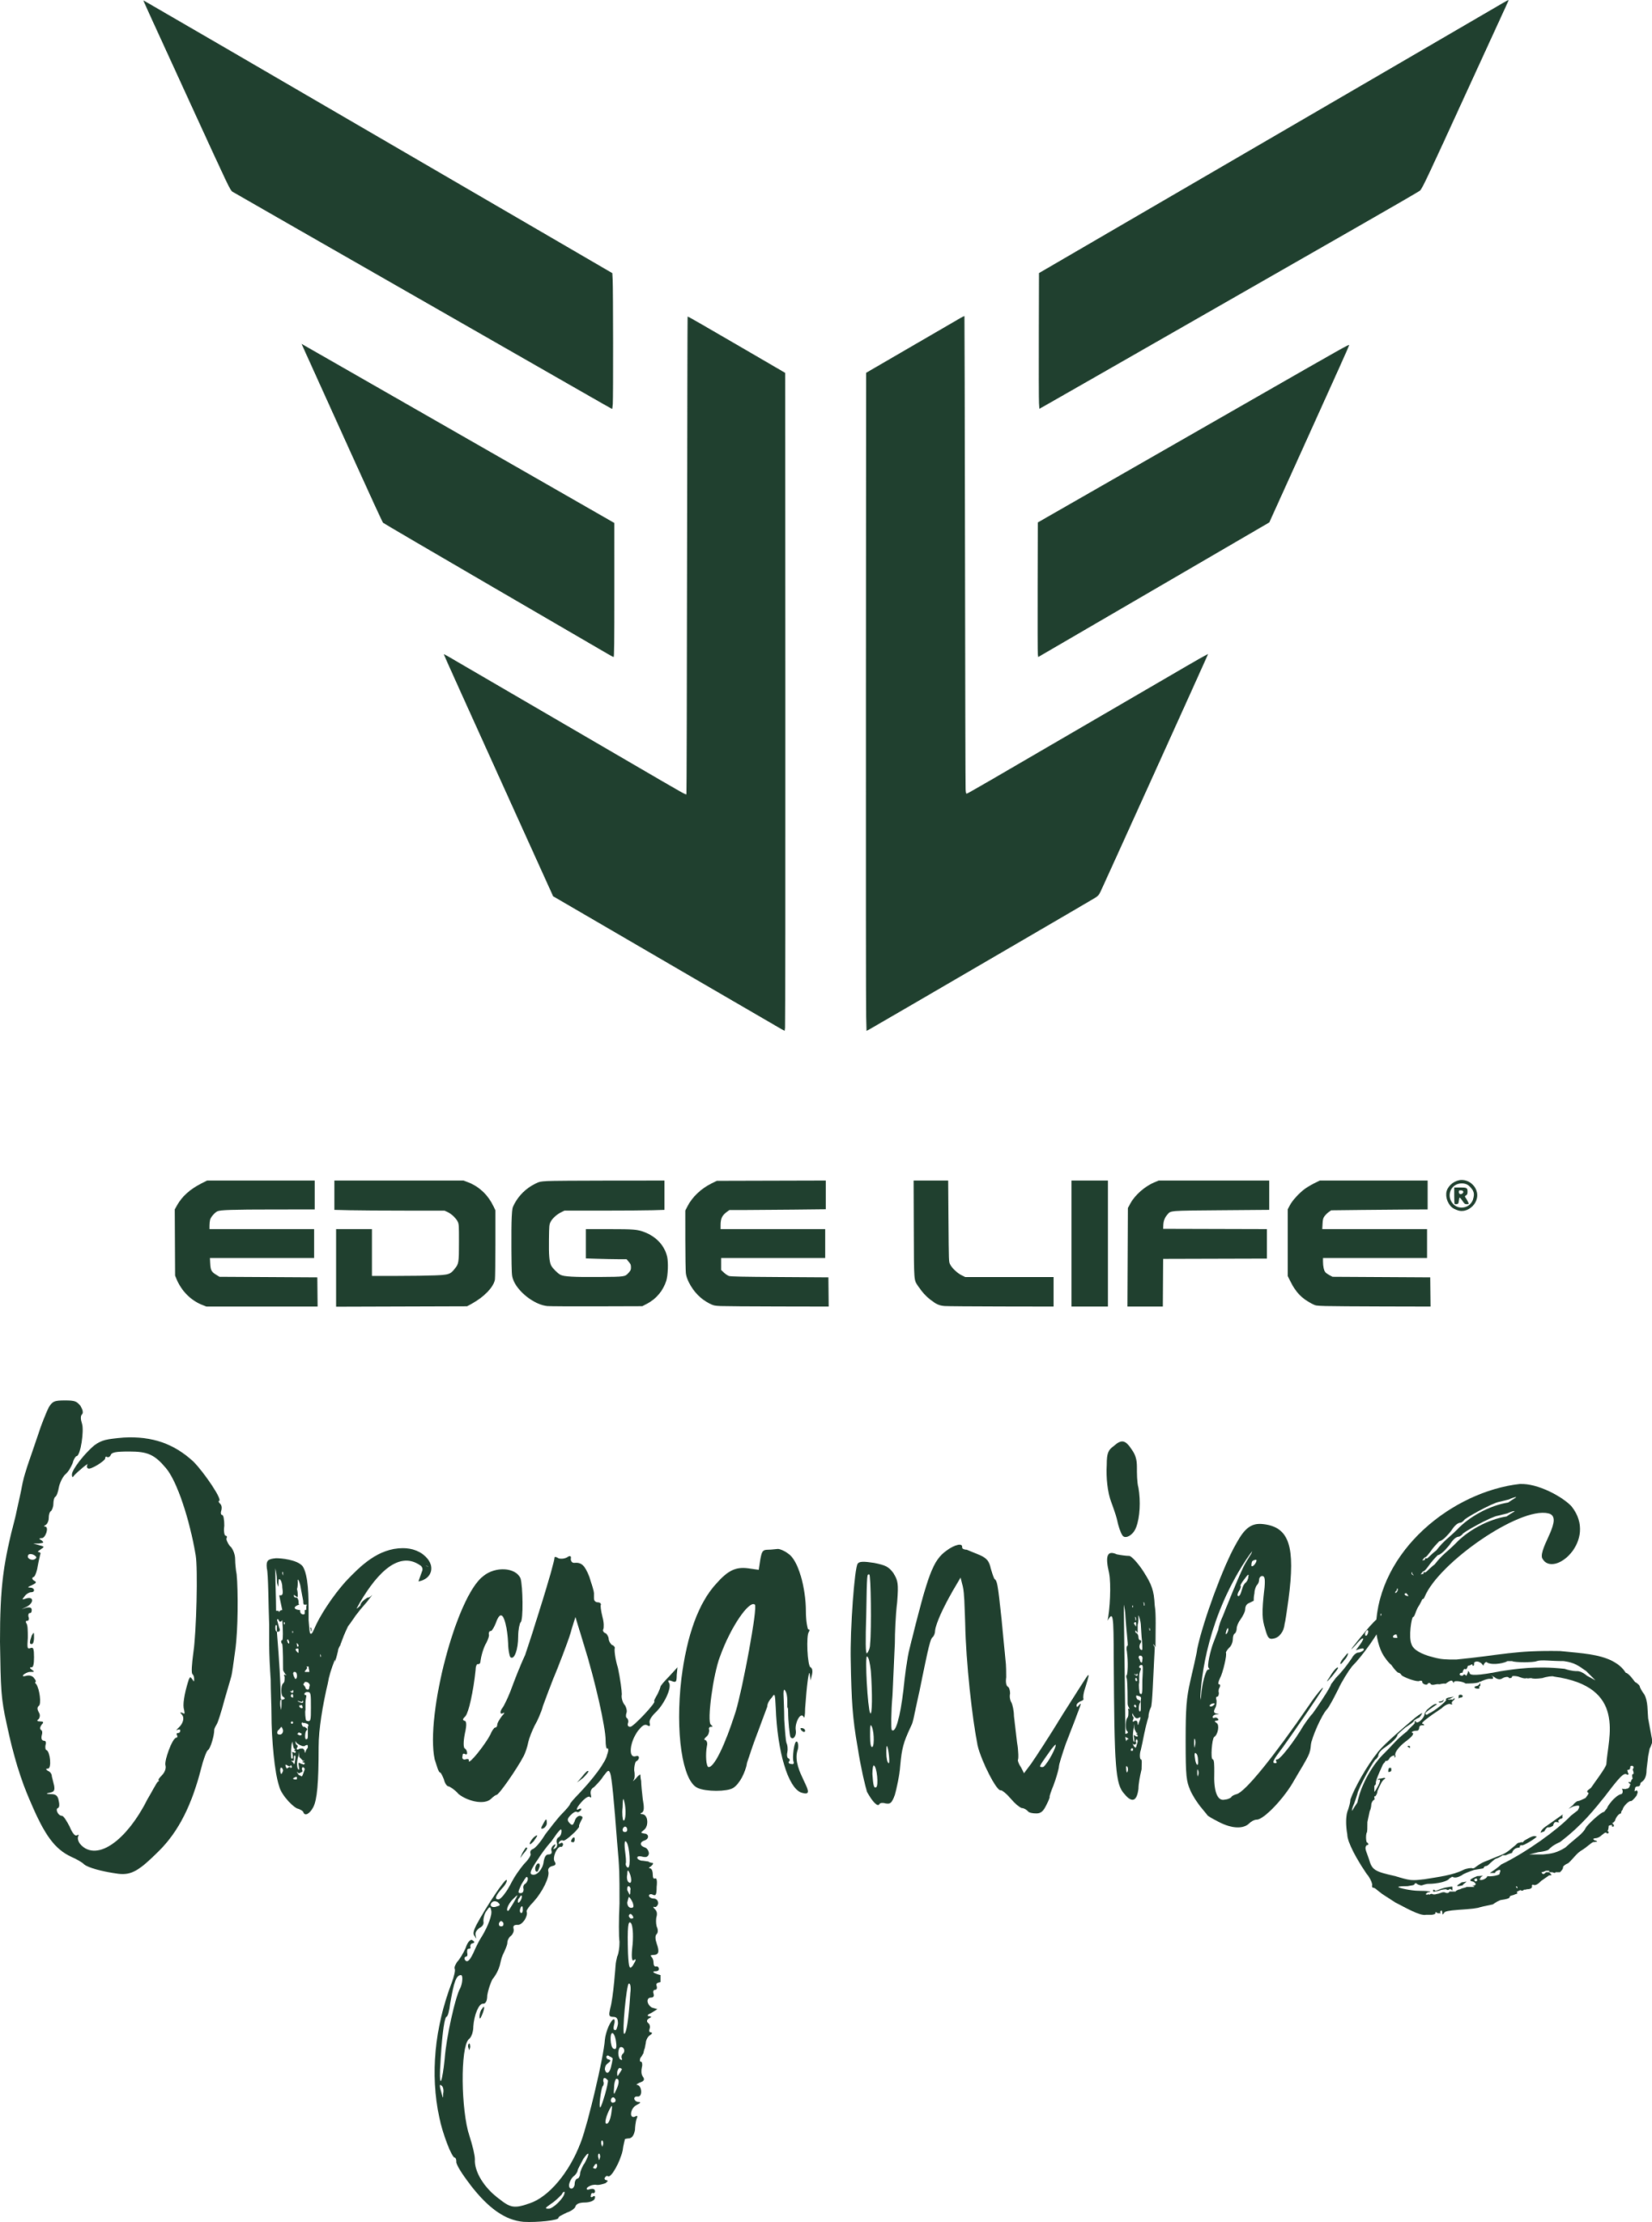 Edge Life Health product brand is Edge Life Organics.